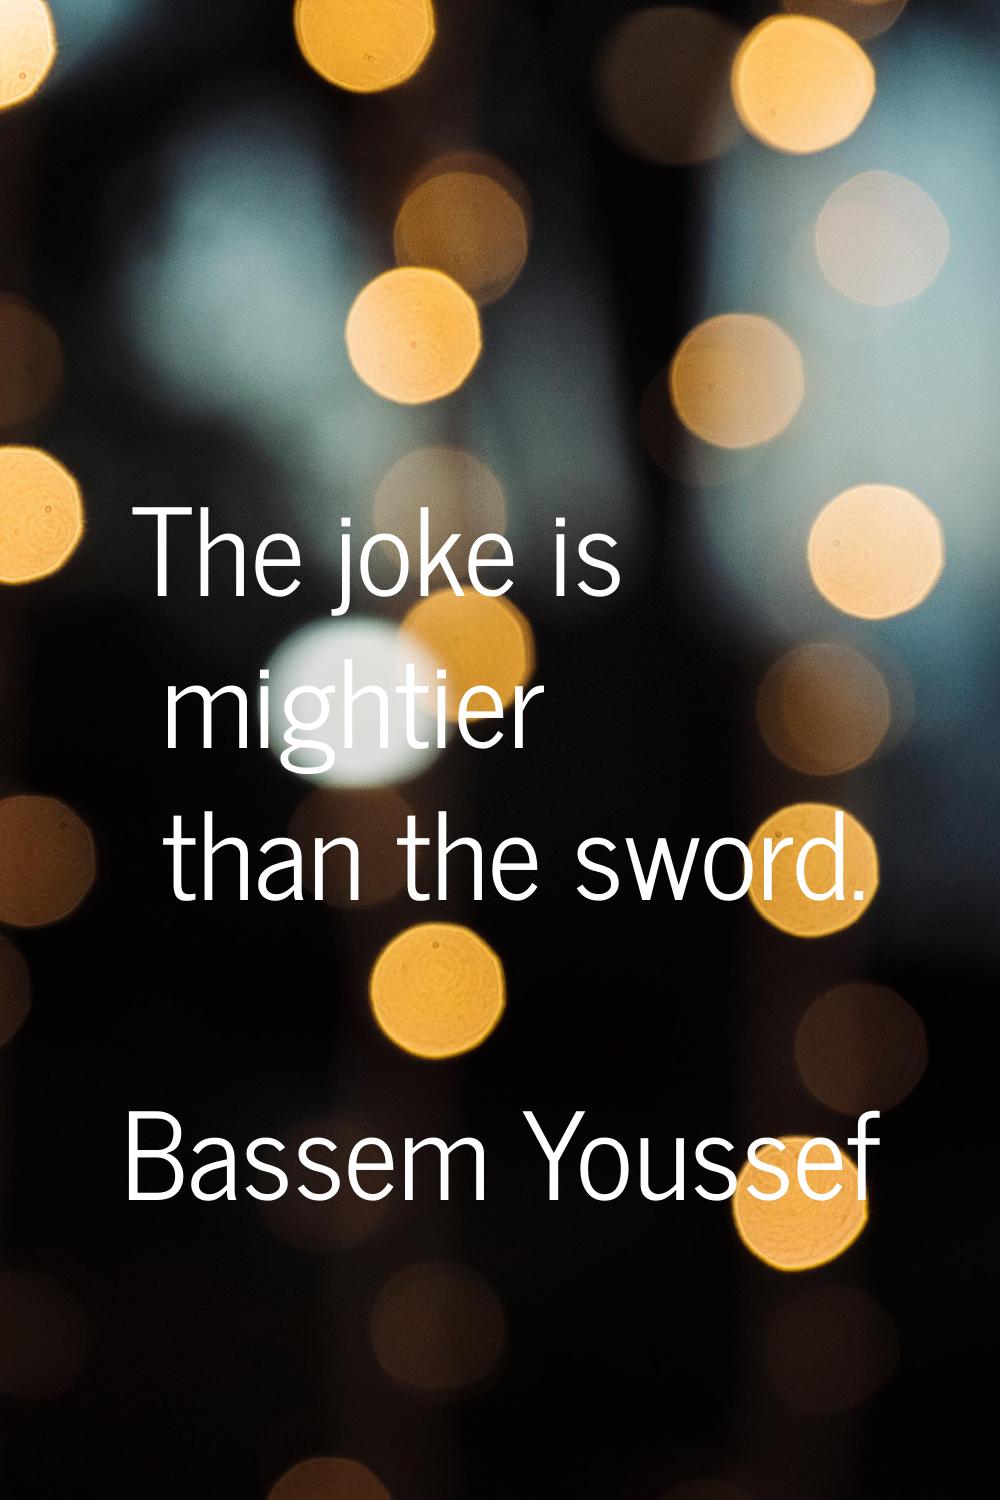 The joke is mightier than the sword.